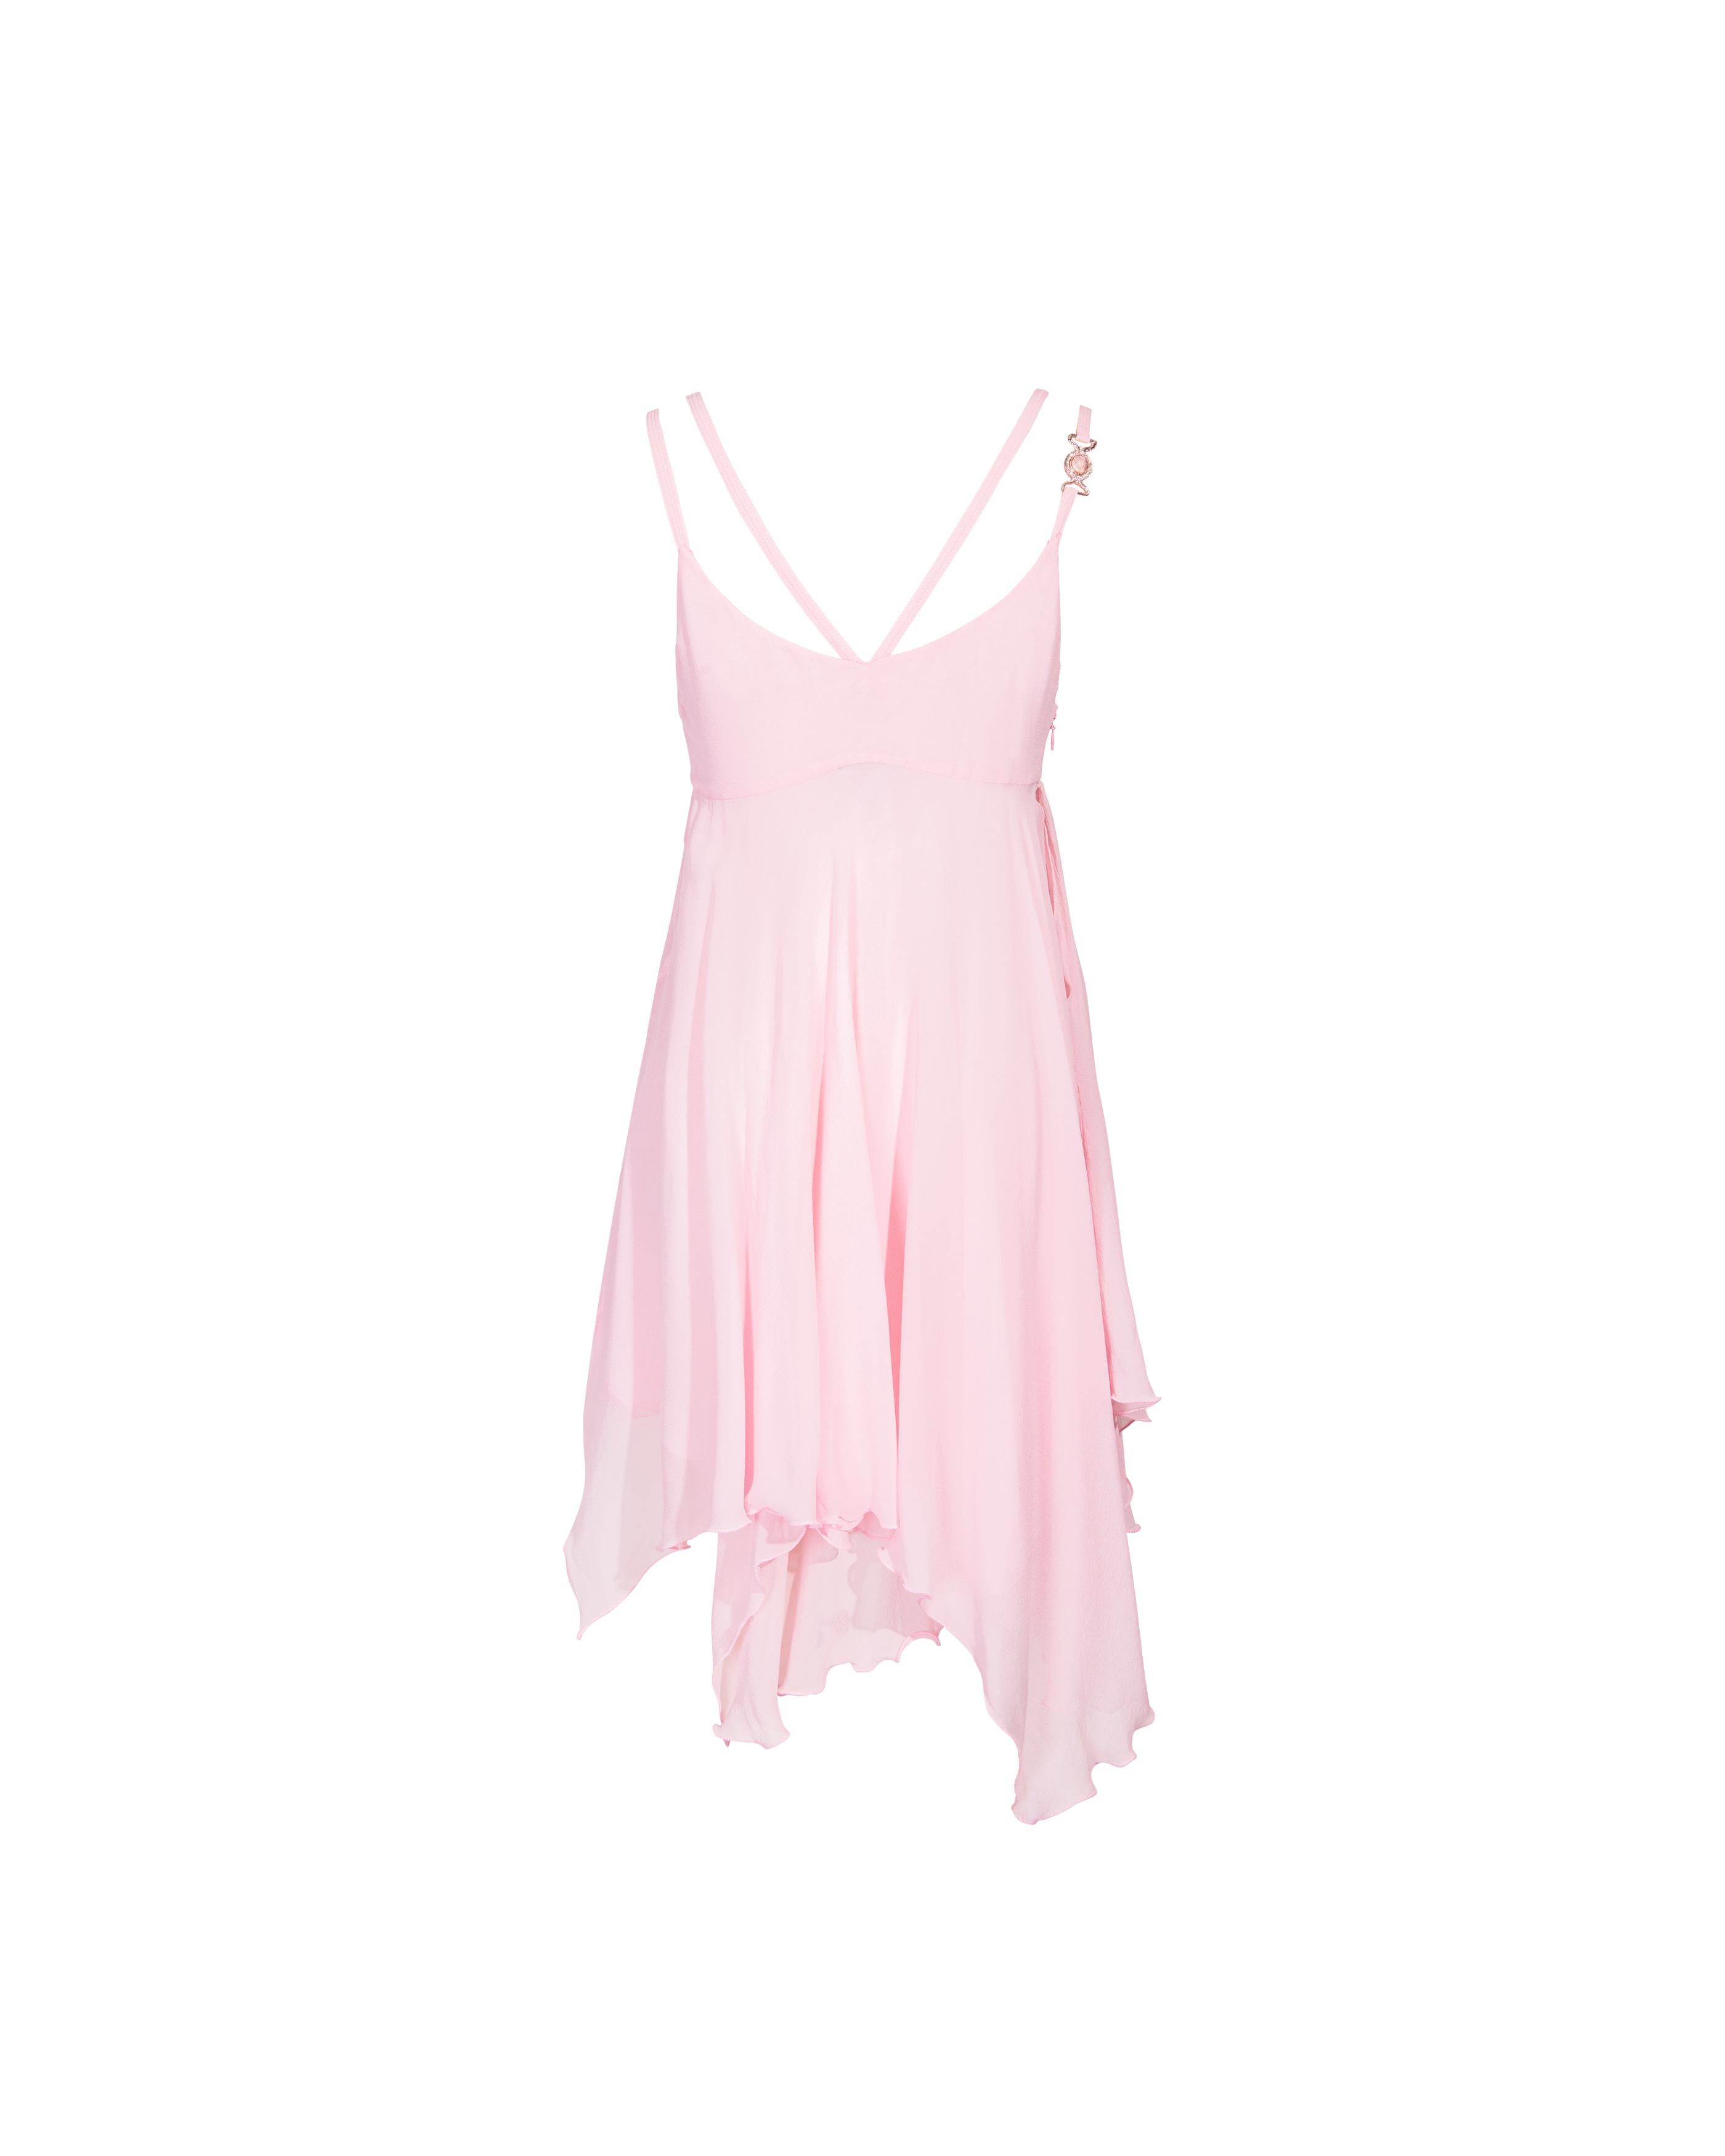 Women's S/S 1995 Gianni Versace Pink Silk Chiffon Mini Dress